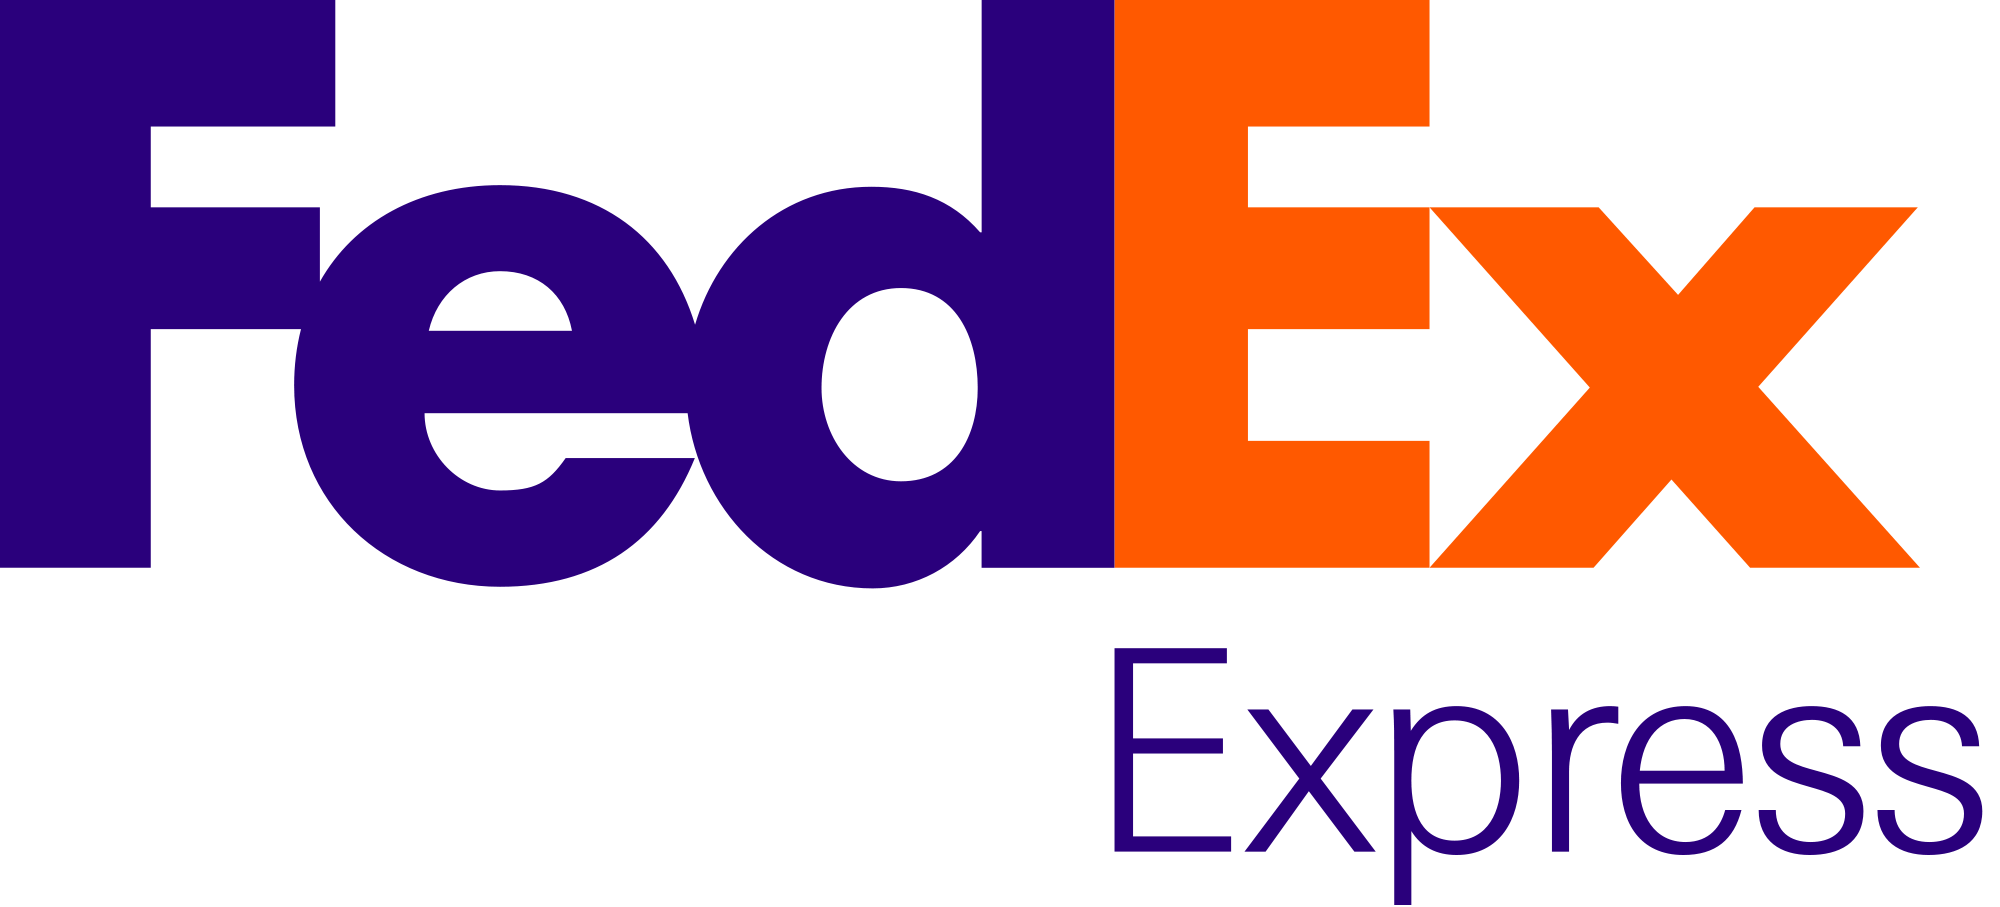 FedEx Logo - File:FedEx Express.svg - Wikimedia Commons